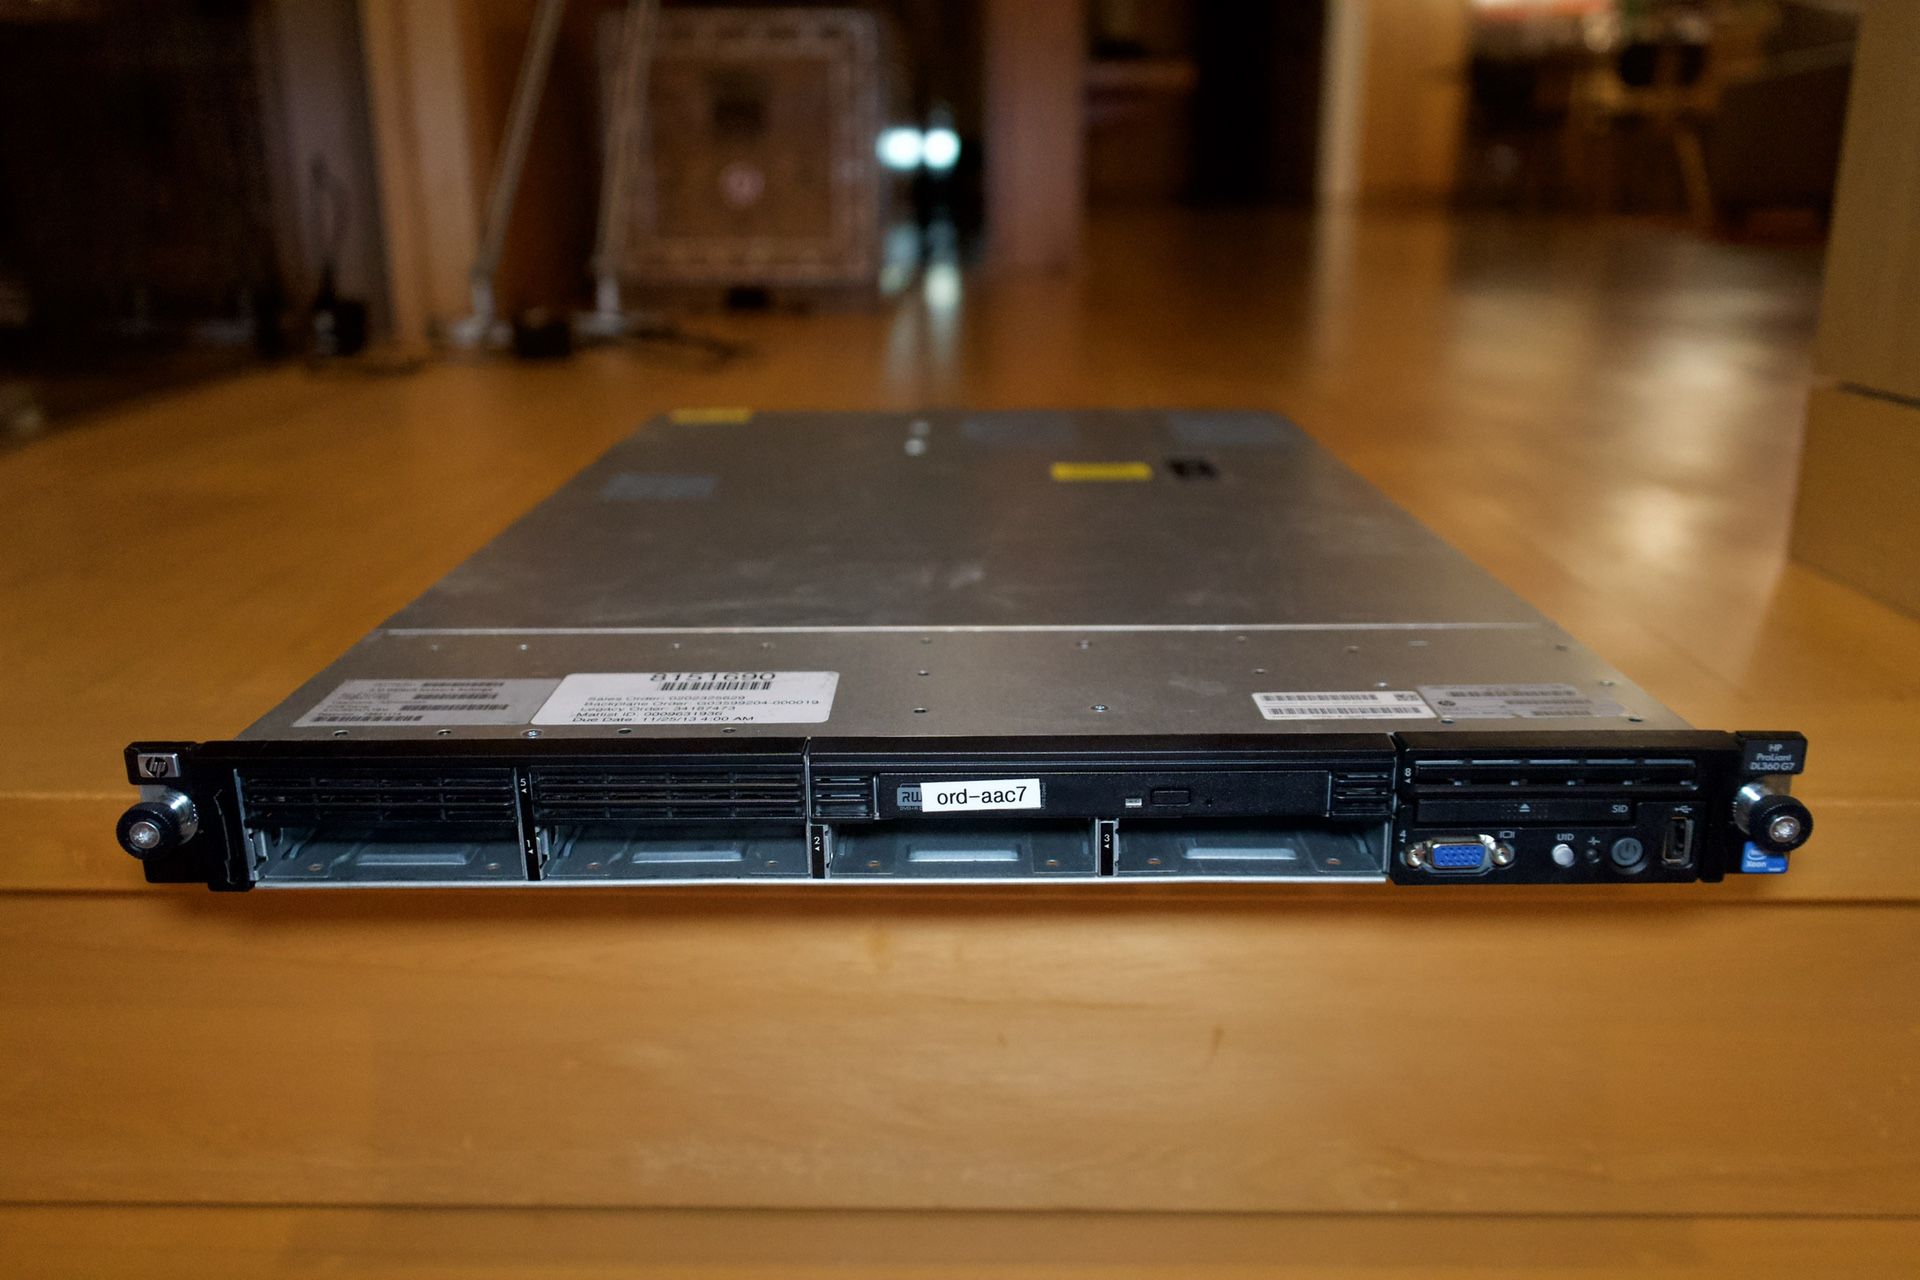 HP ProLiant DL360 G7 SFF server: 2x Intel Xeon X5670 2.9 GHz 6-core CPU, 36GB DDR3-1333, no HDDs